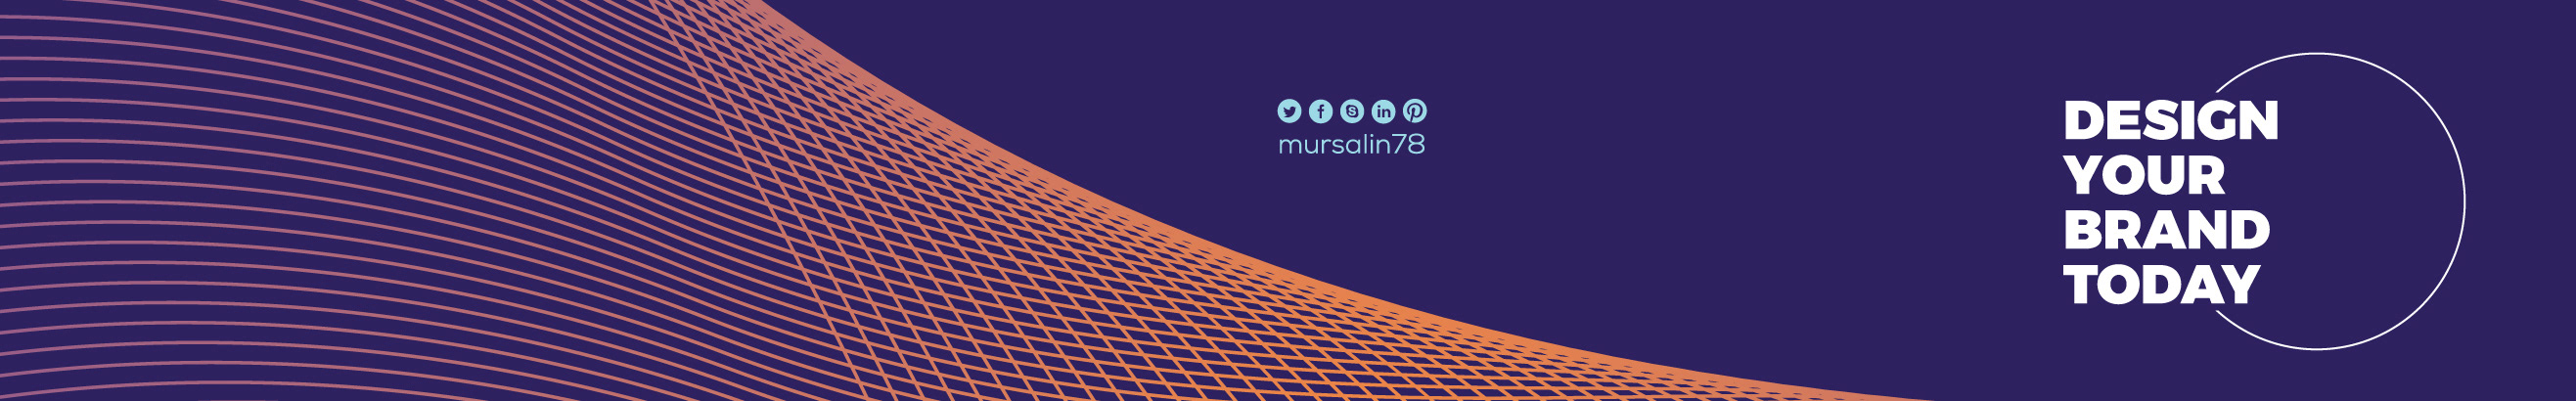 Mursalin Hossain's profile banner